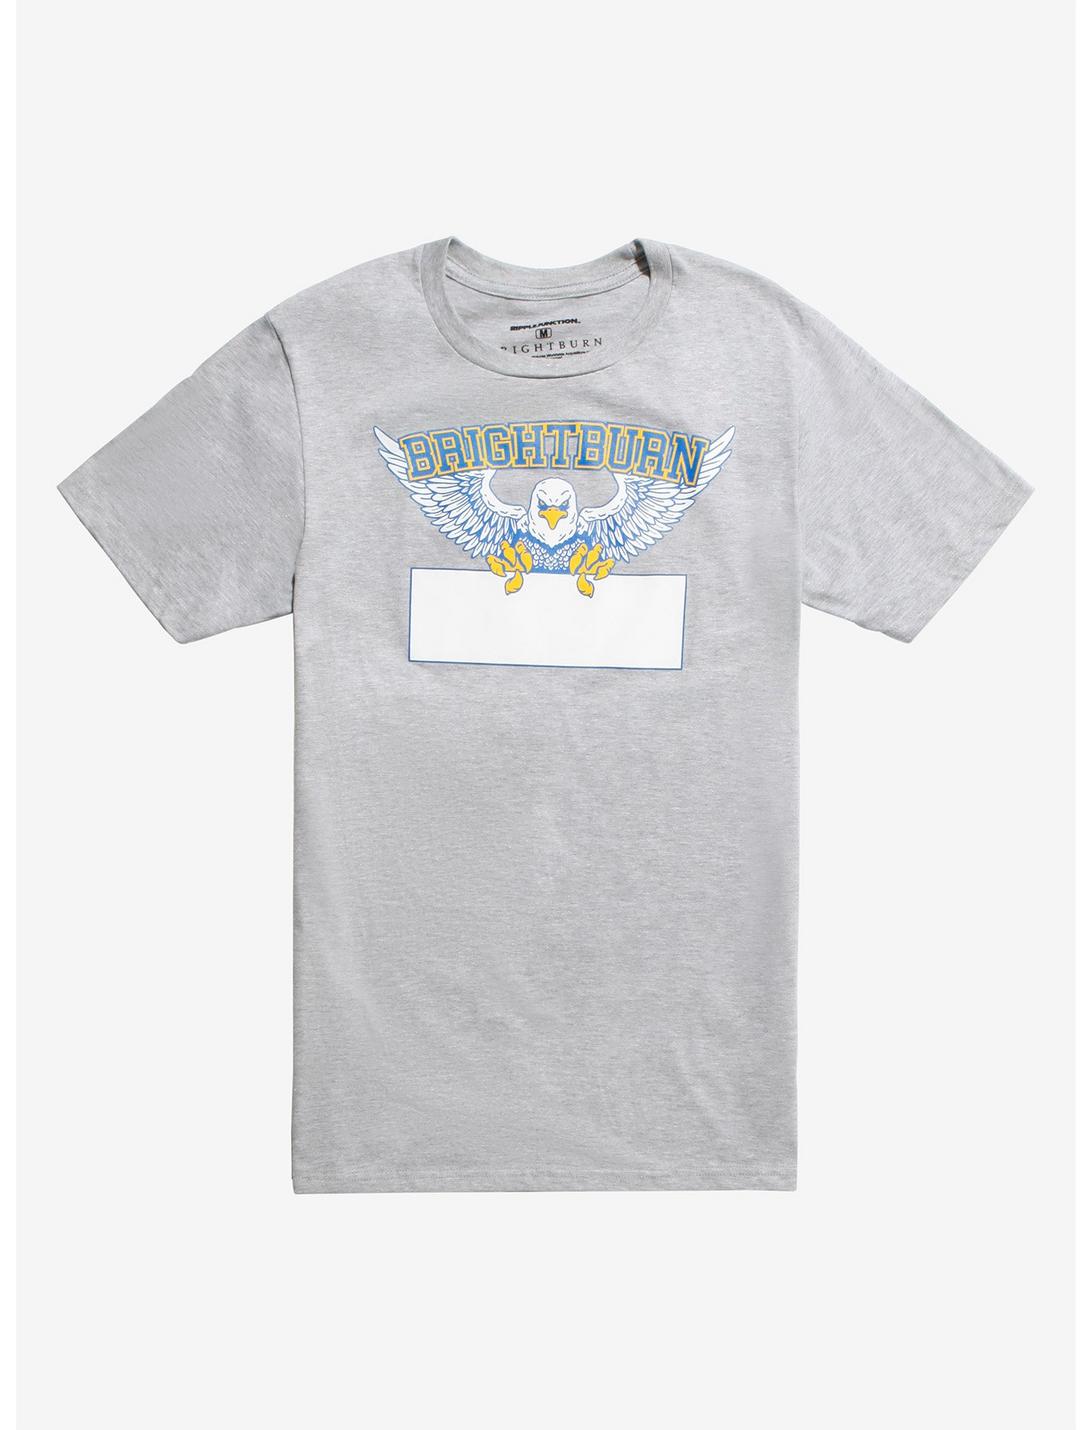 Brightburn Gym T-Shirt, WHITE, hi-res